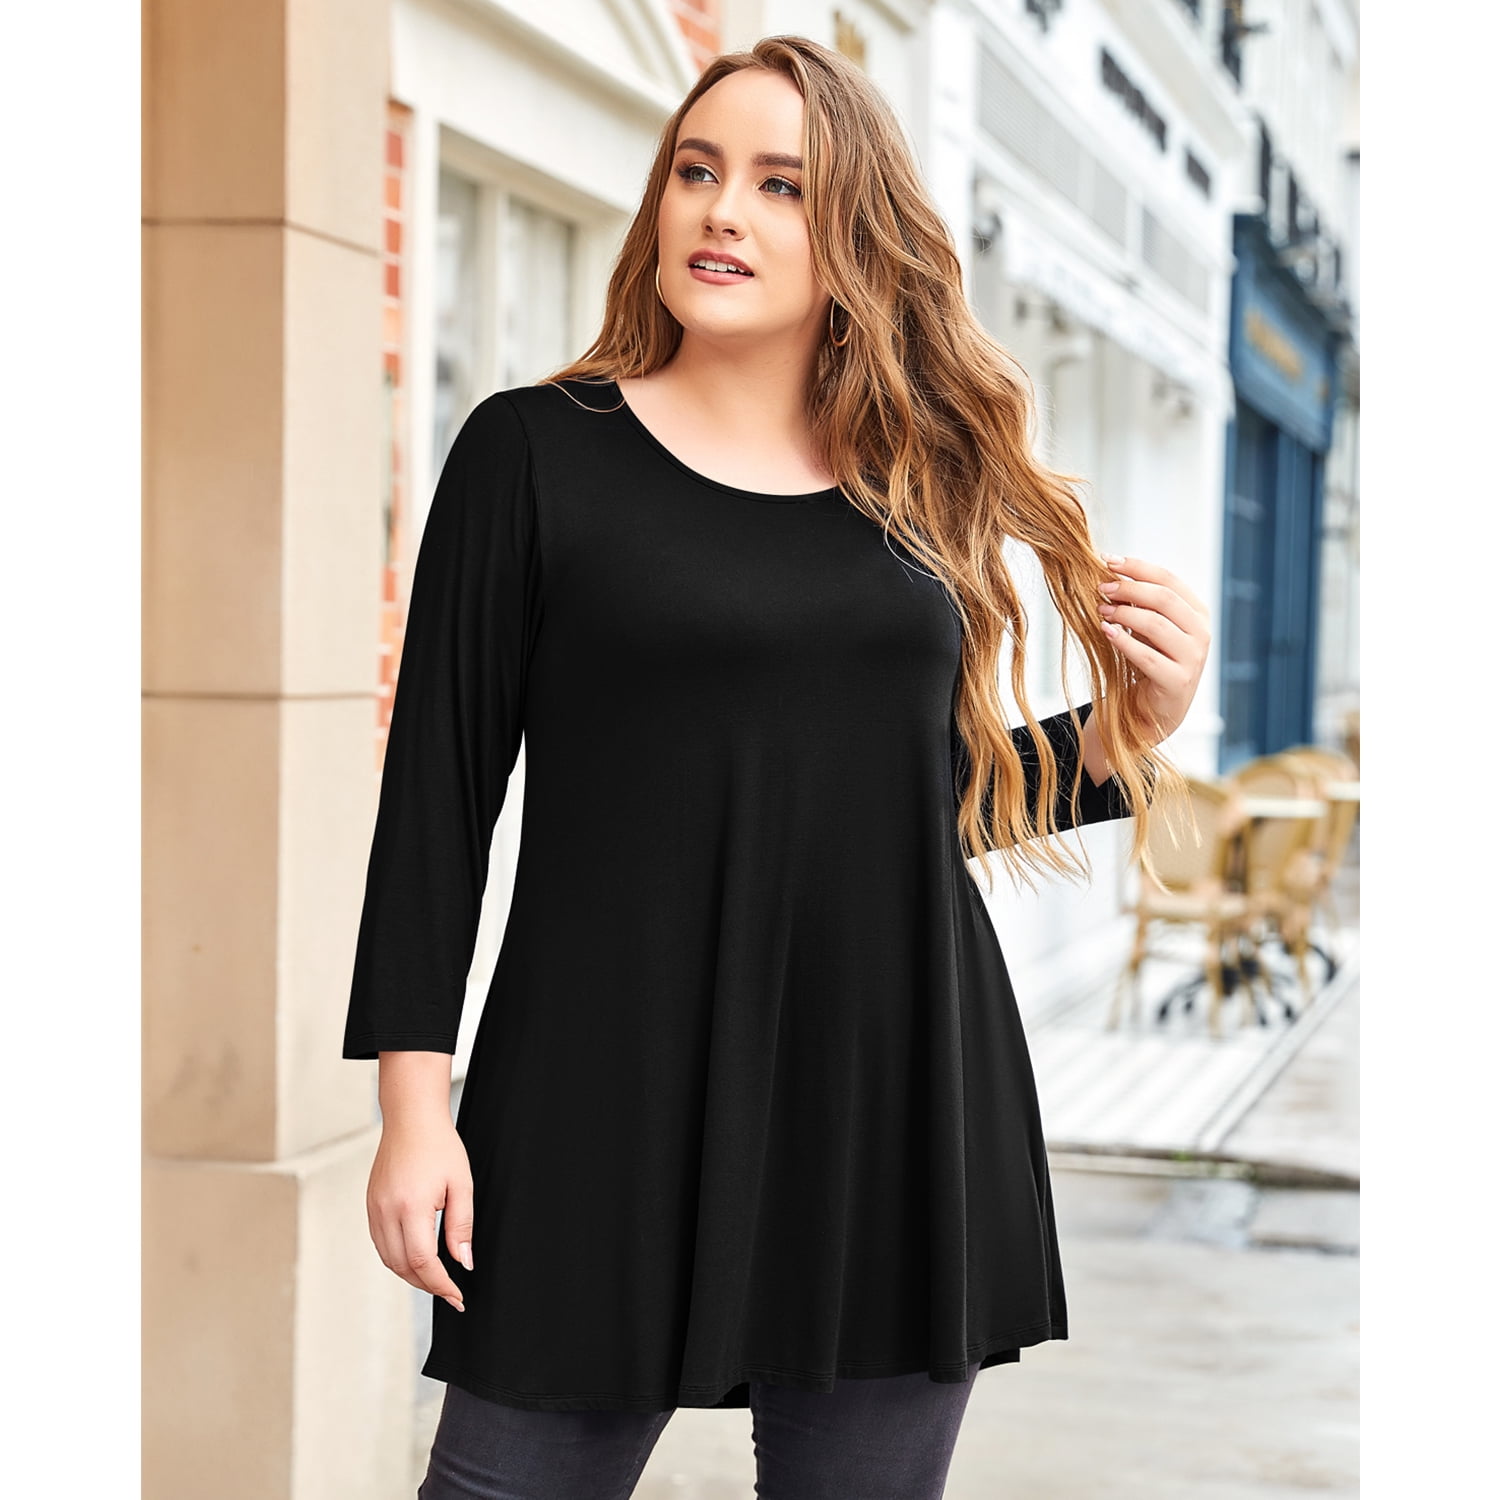 LARACE 3/4 Sleeve Shirts for Women Plus Size Tunic Dressy Top Loose Fit  Flare T-Shirt Black 4X